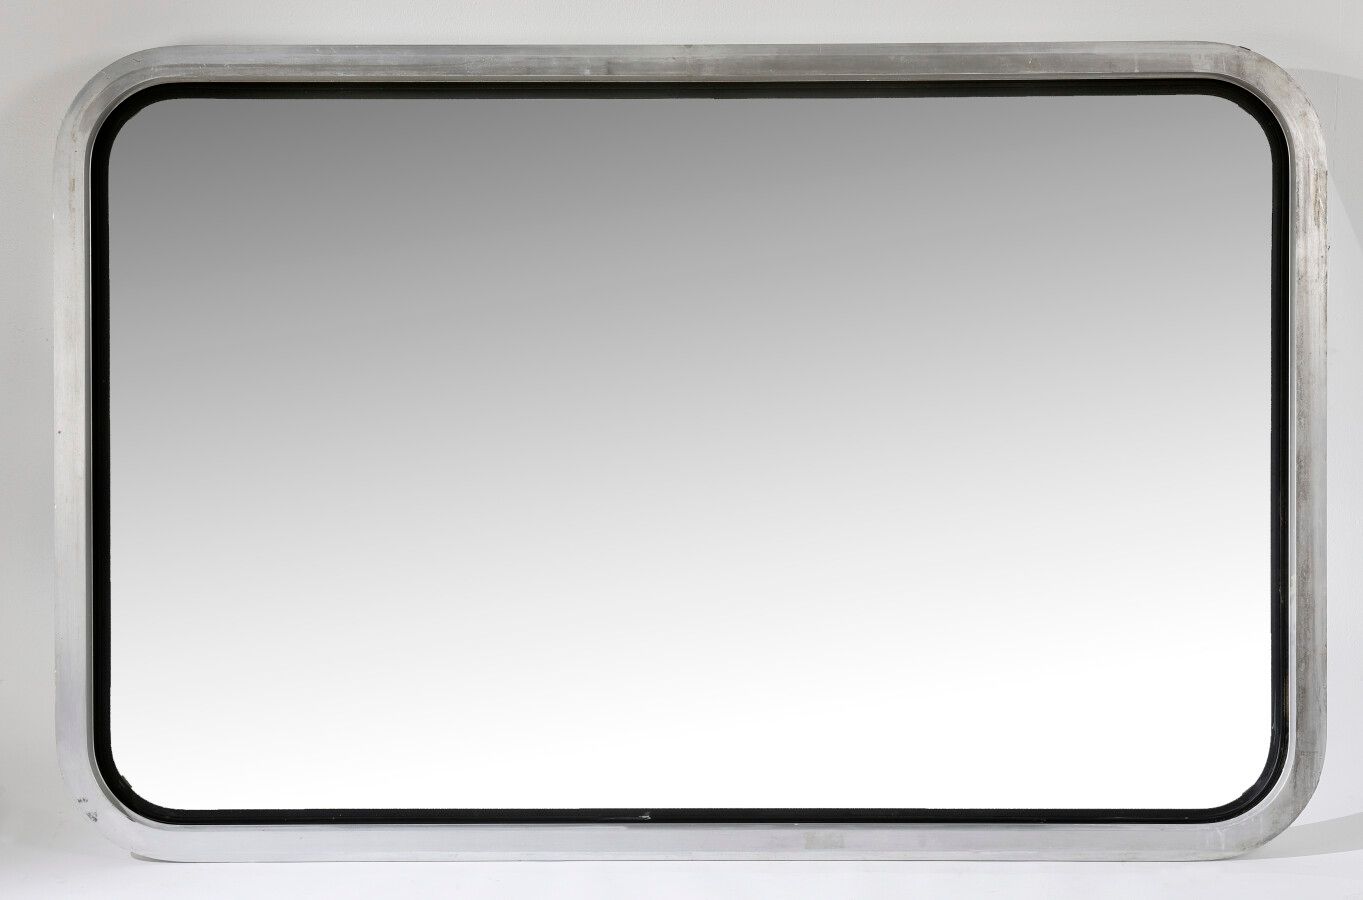 Null 让-普鲁维(1901-1984)

窗户，约1960年

玻璃，铝

H.172 cm - D. 7 cm - W. 110.5 cm



出处：L&hellip;